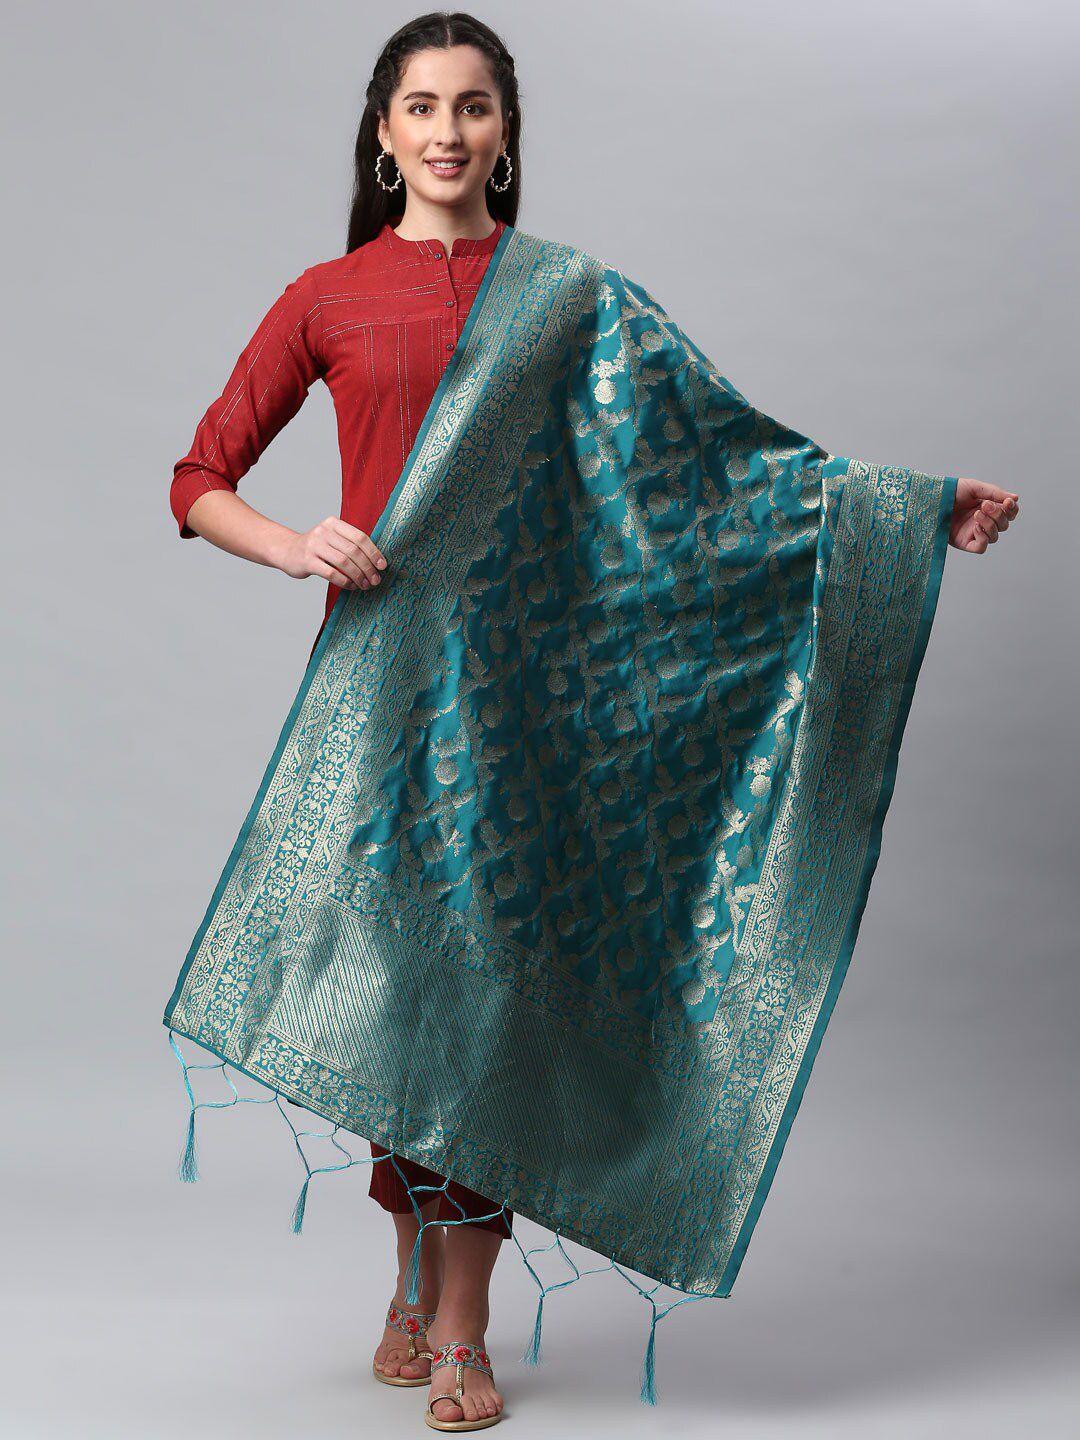 lilots-turquoise-blue-&-gold-toned-ethnic-motifs-woven-design-dupatta